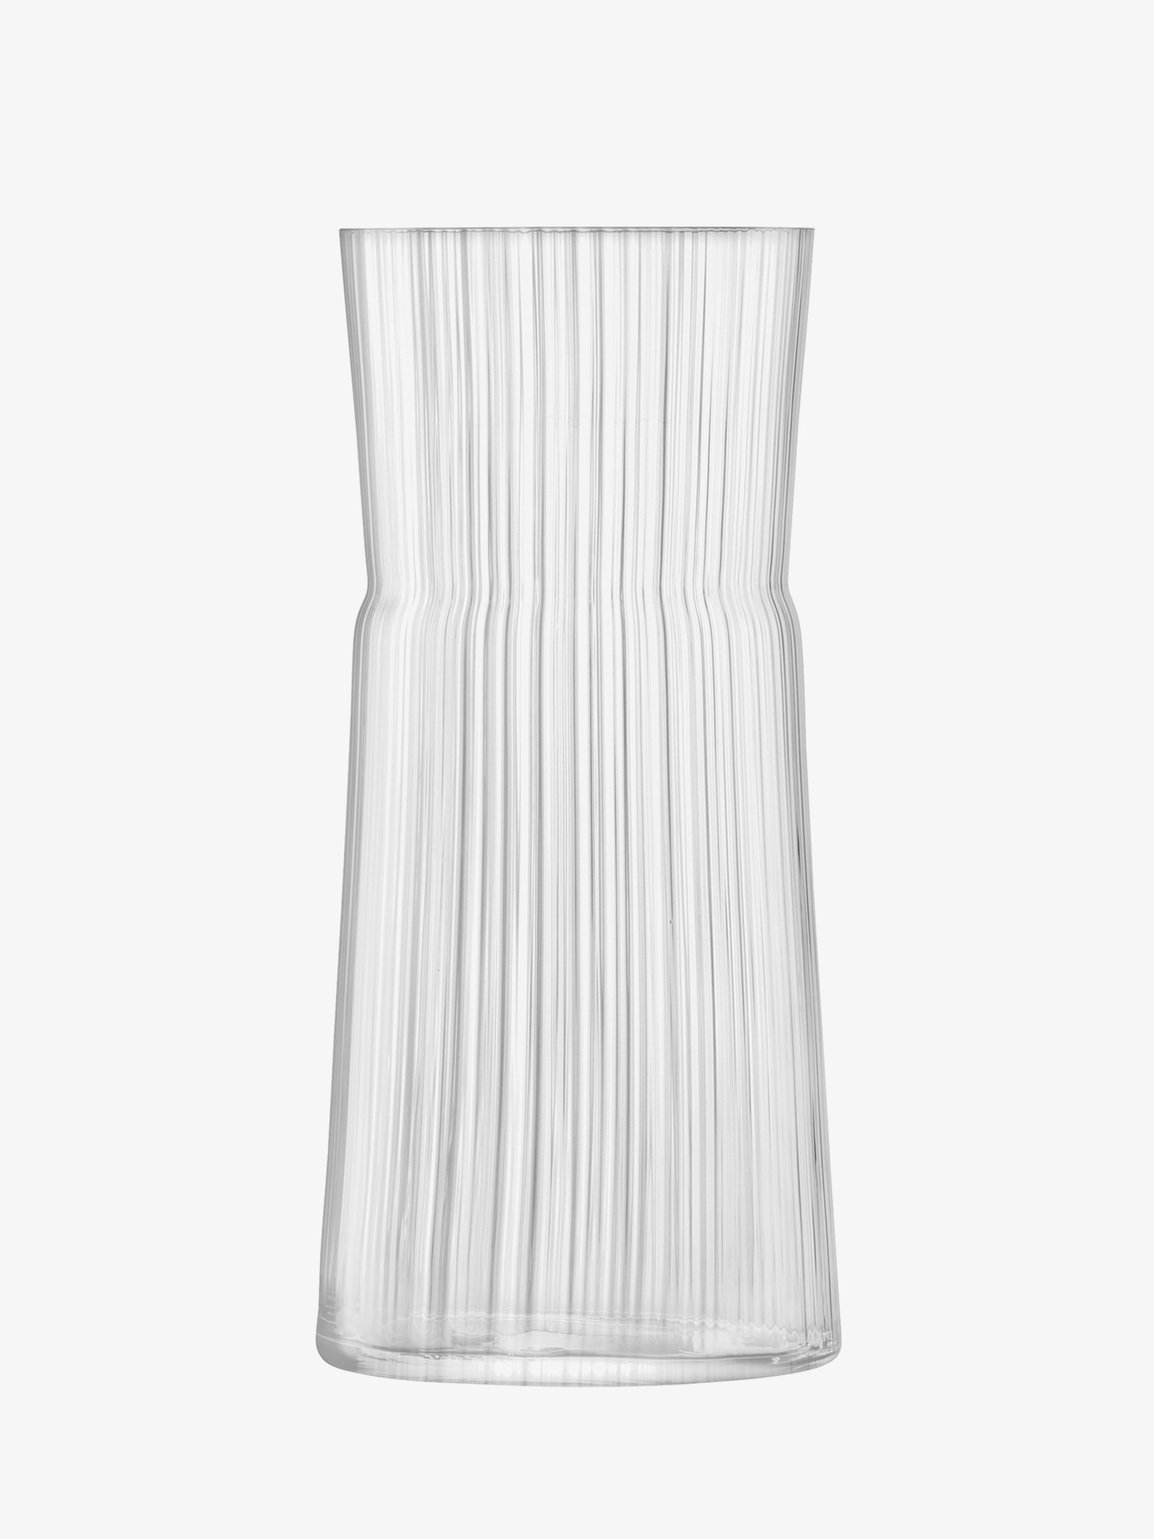 Lantern/Vase H38cm